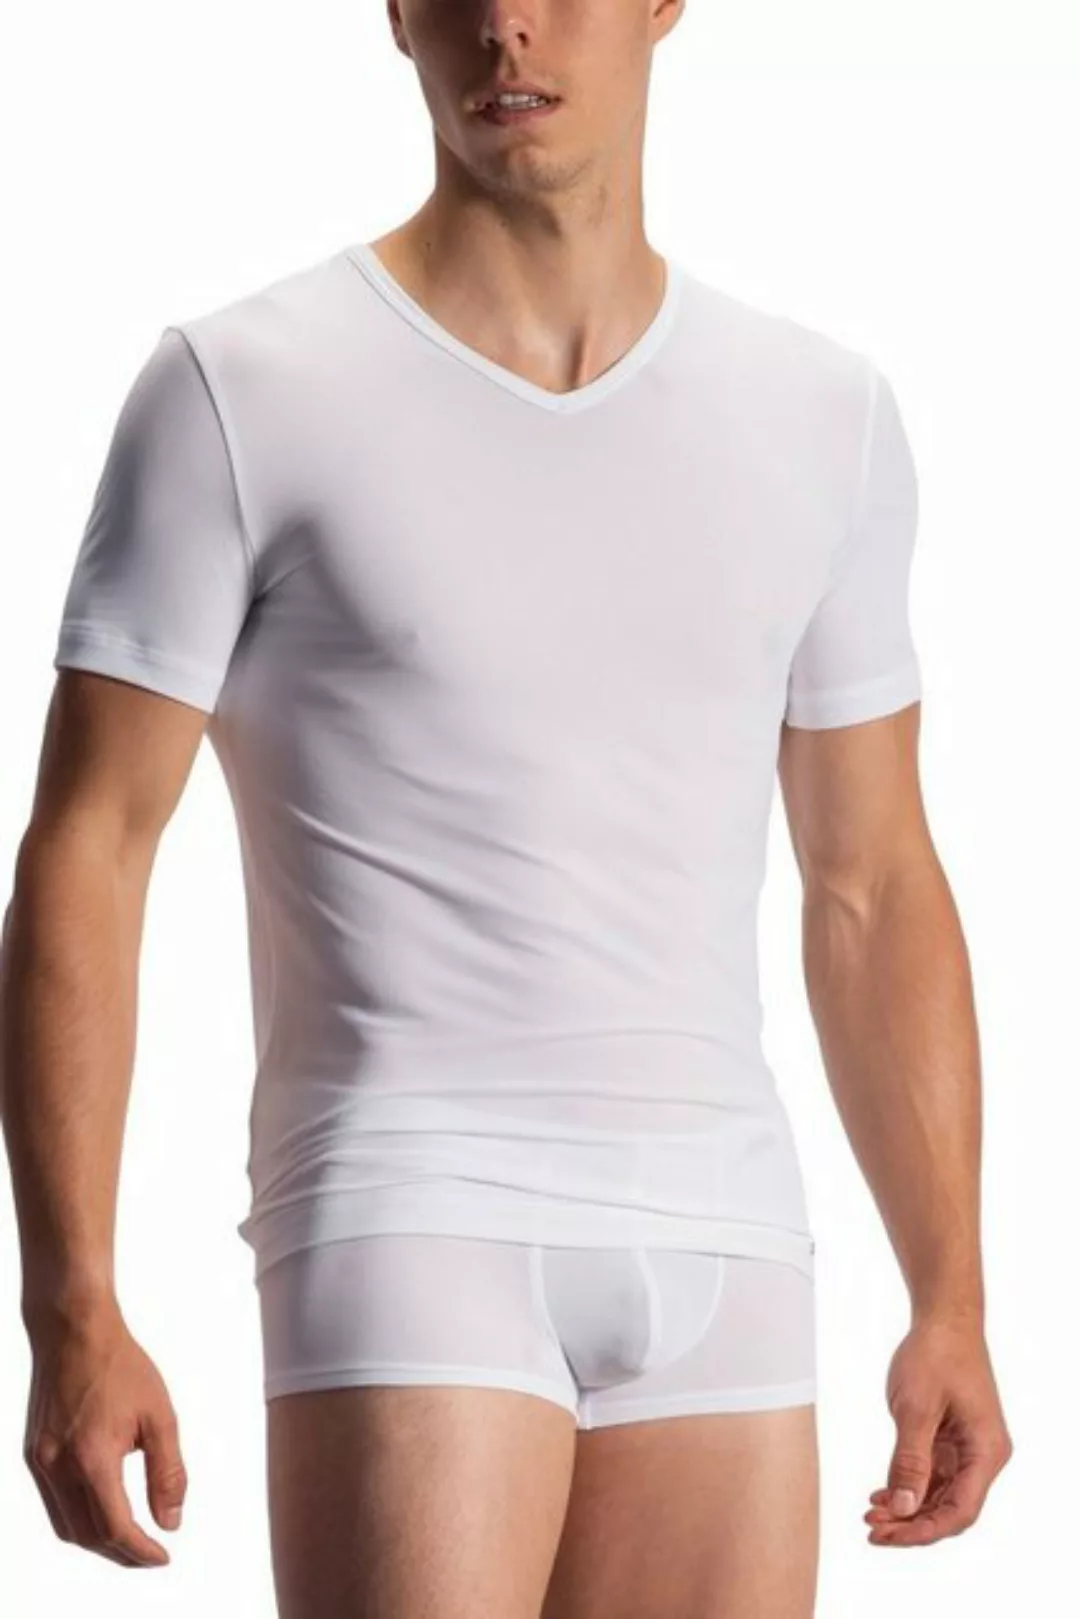 Olaf Benz T-Shirt Shirt V-Neck (Reg) 108404 günstig online kaufen